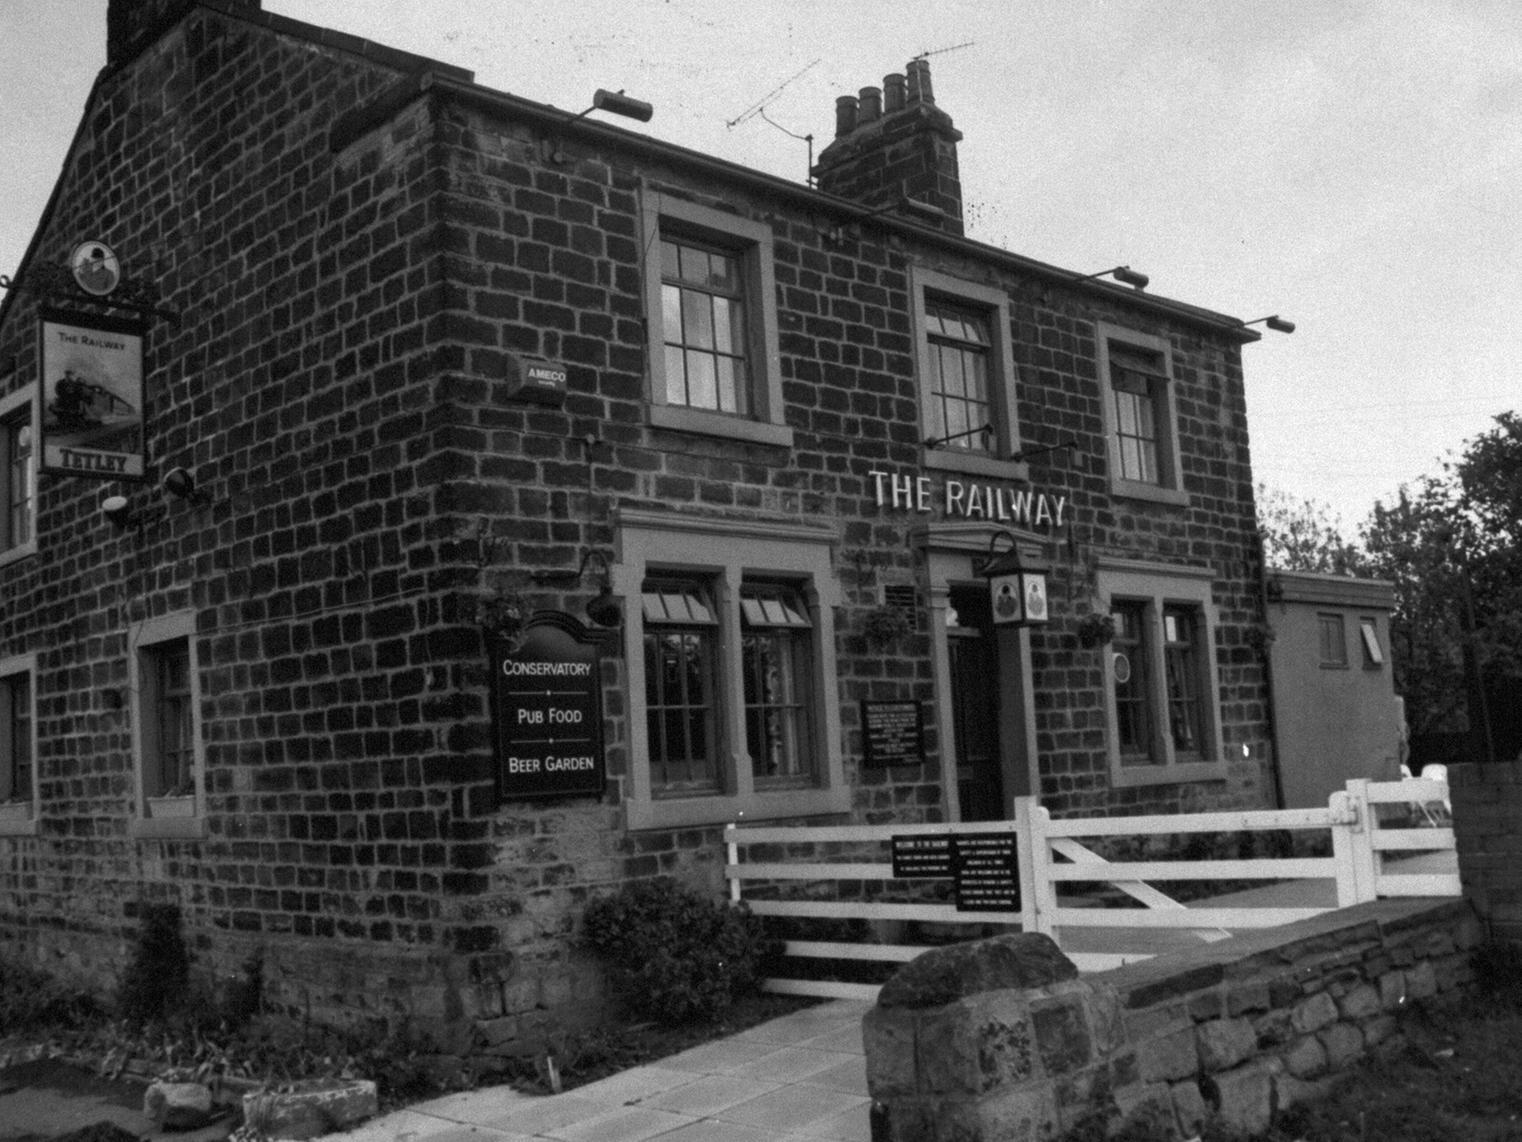 The Railway pub at Calverley Bridge in Rodley.